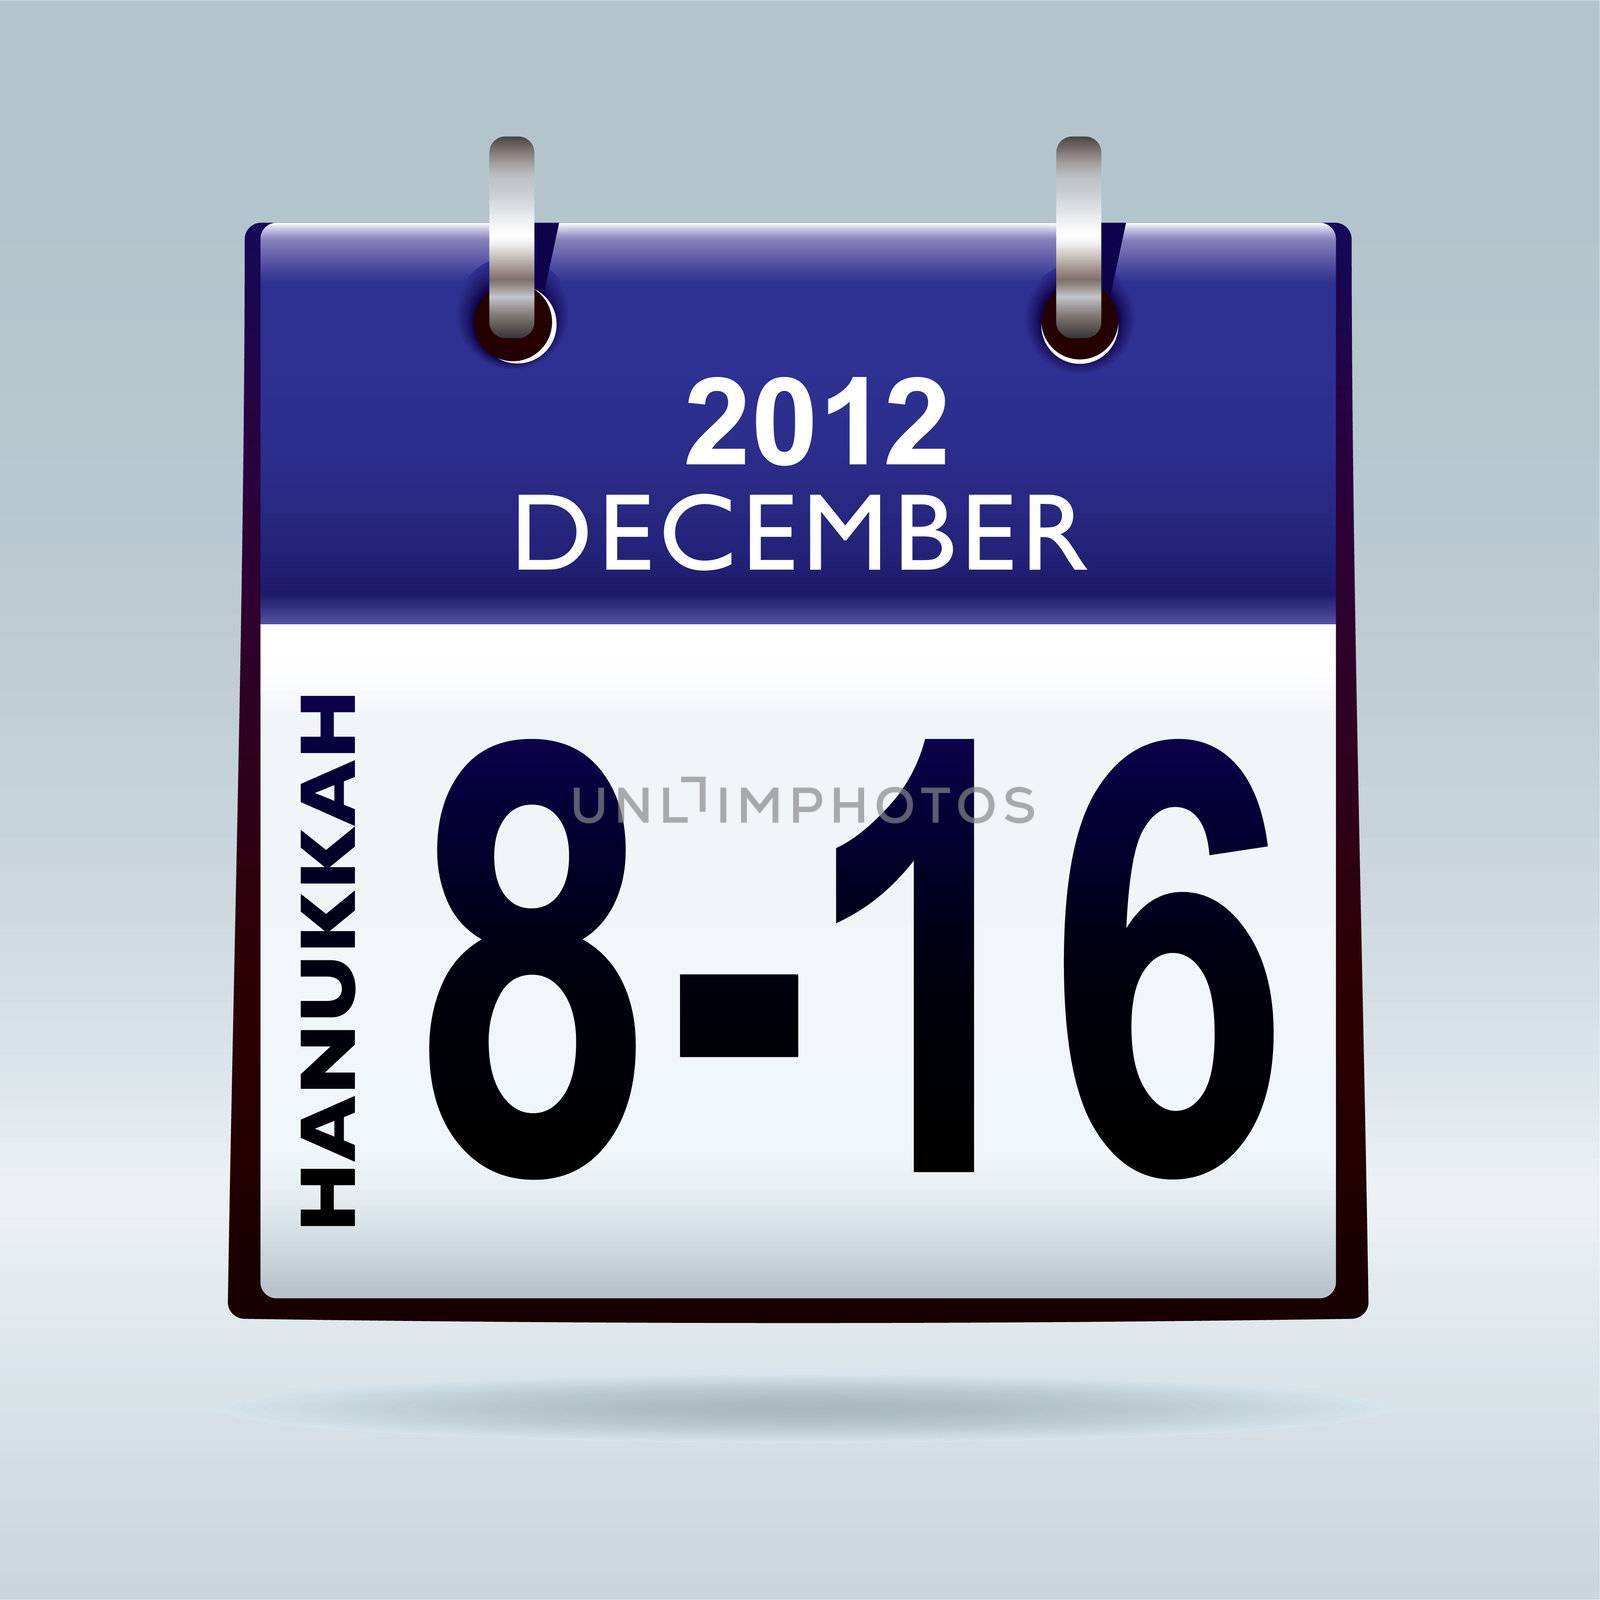 Jewish hanukkah 2012 dates in december with blue calendar